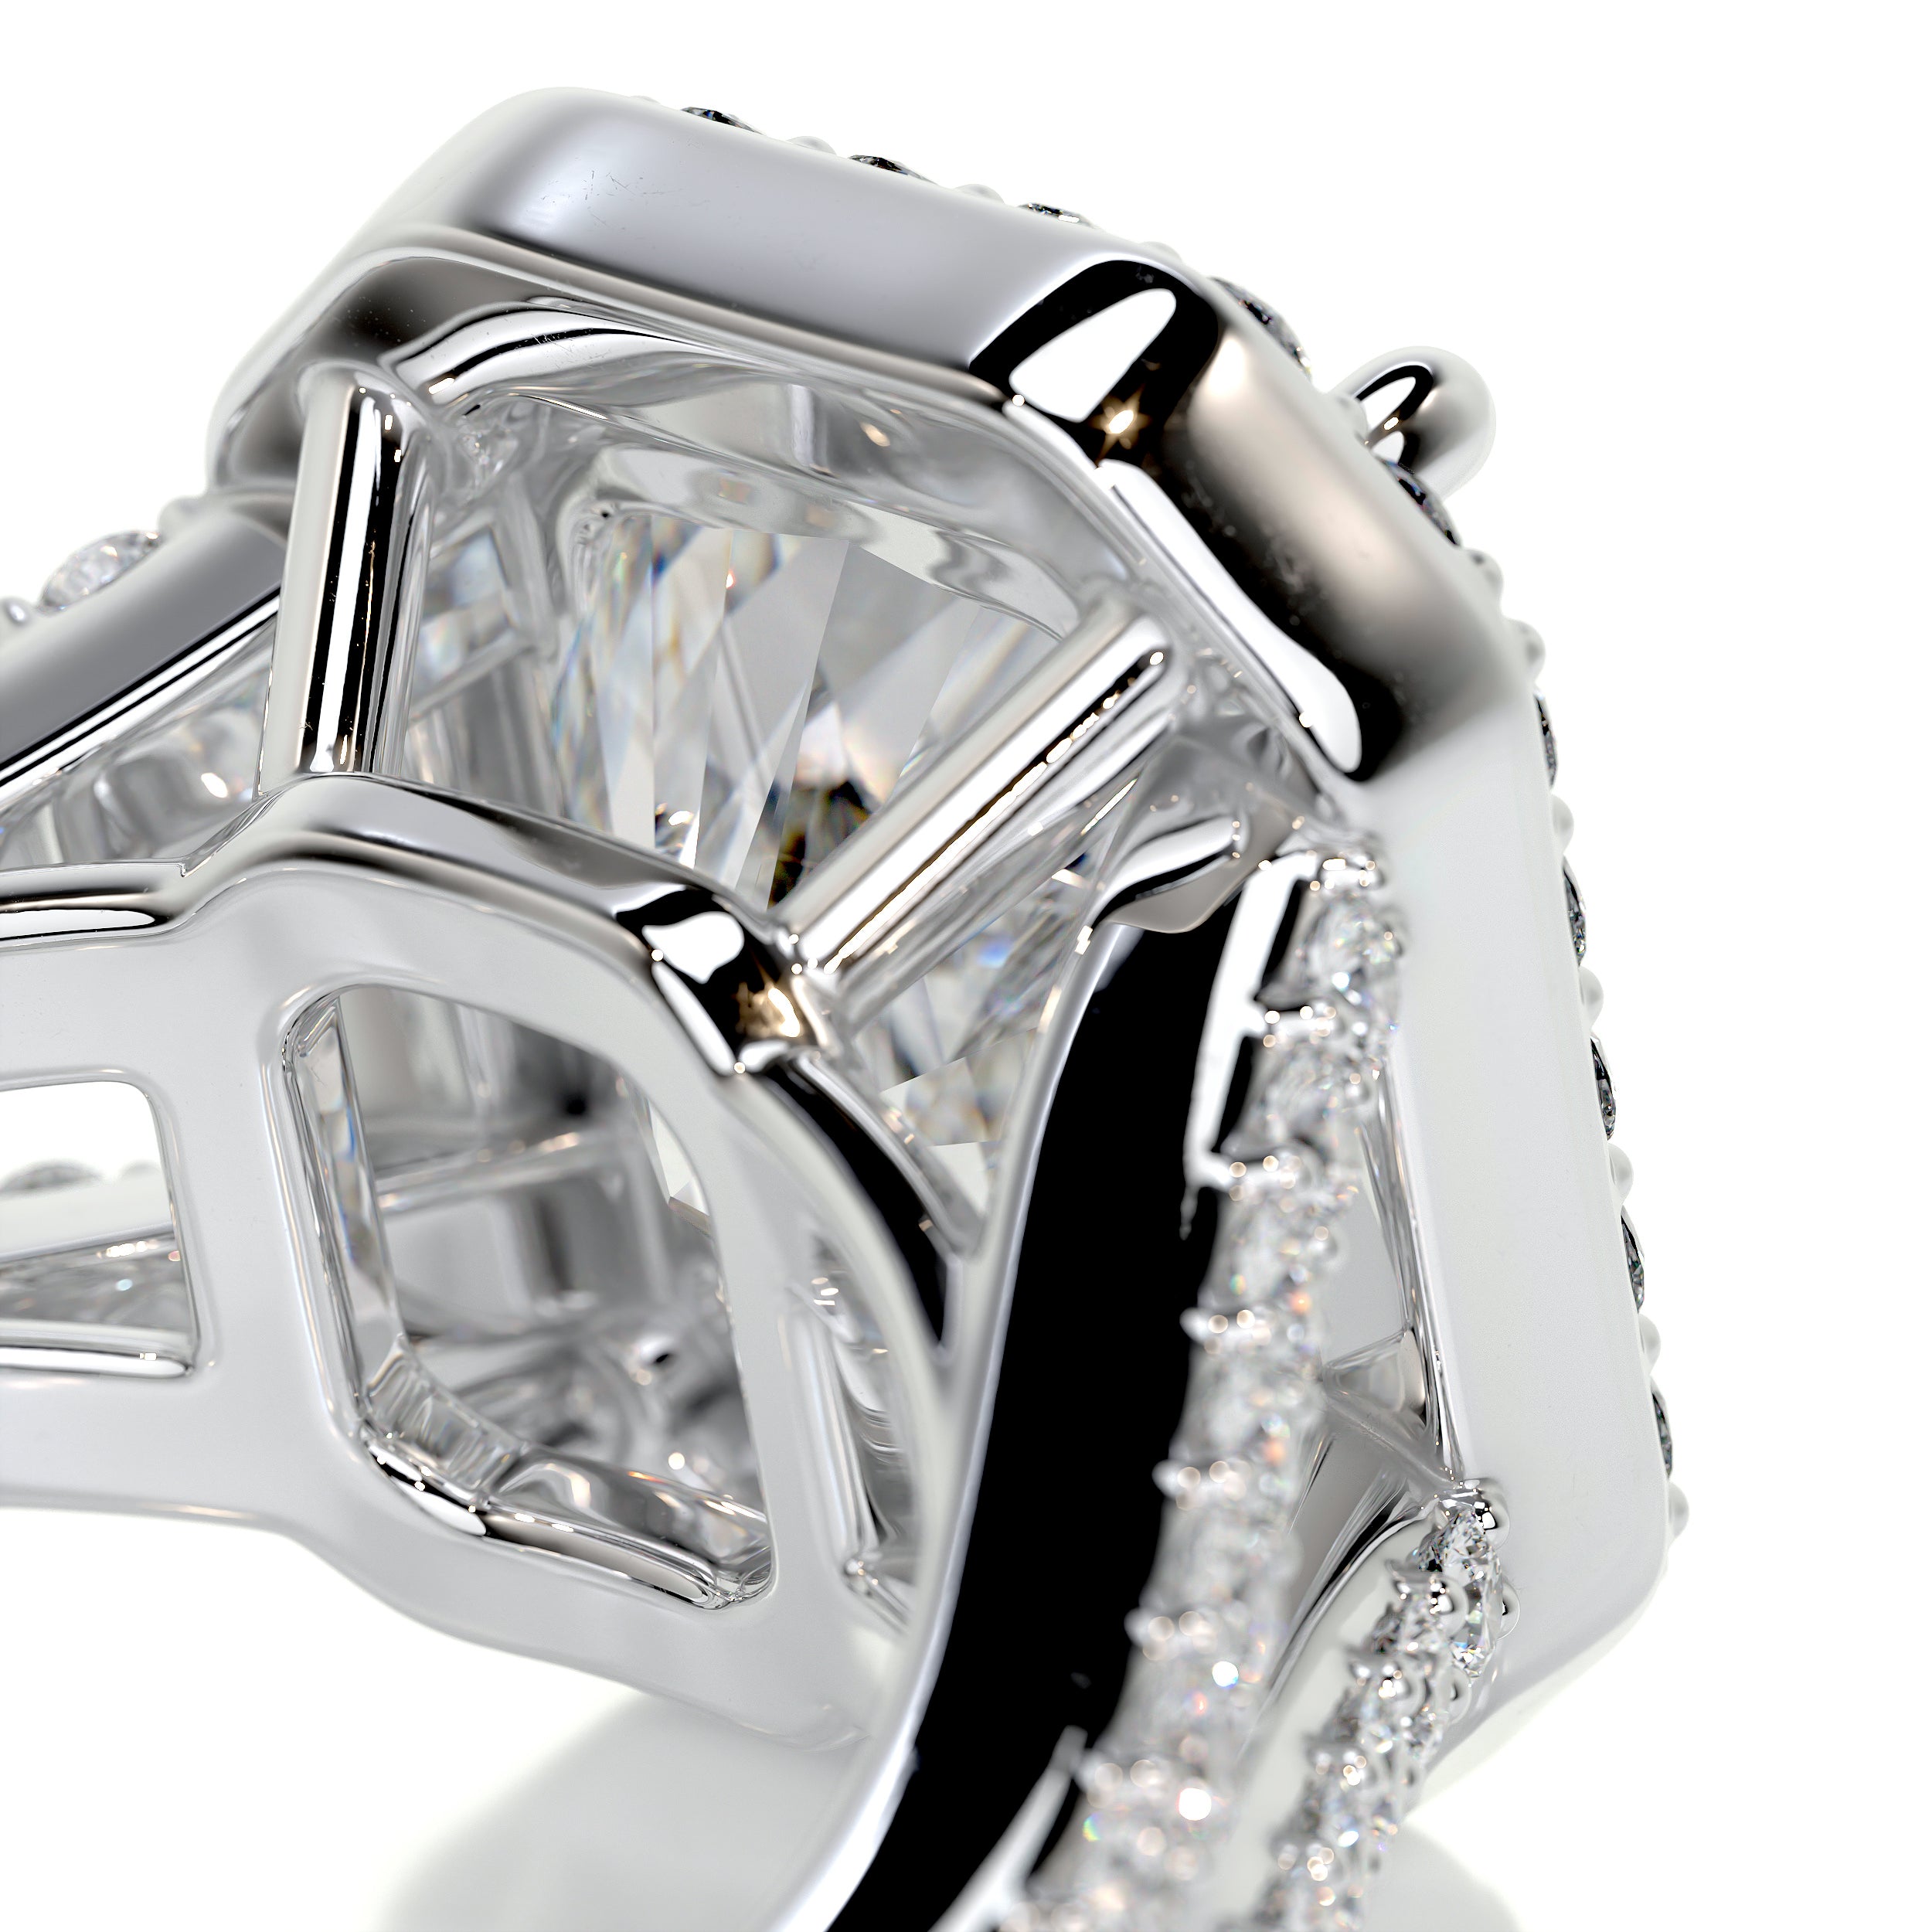 Marina Diamond Engagement Ring -18K White Gold